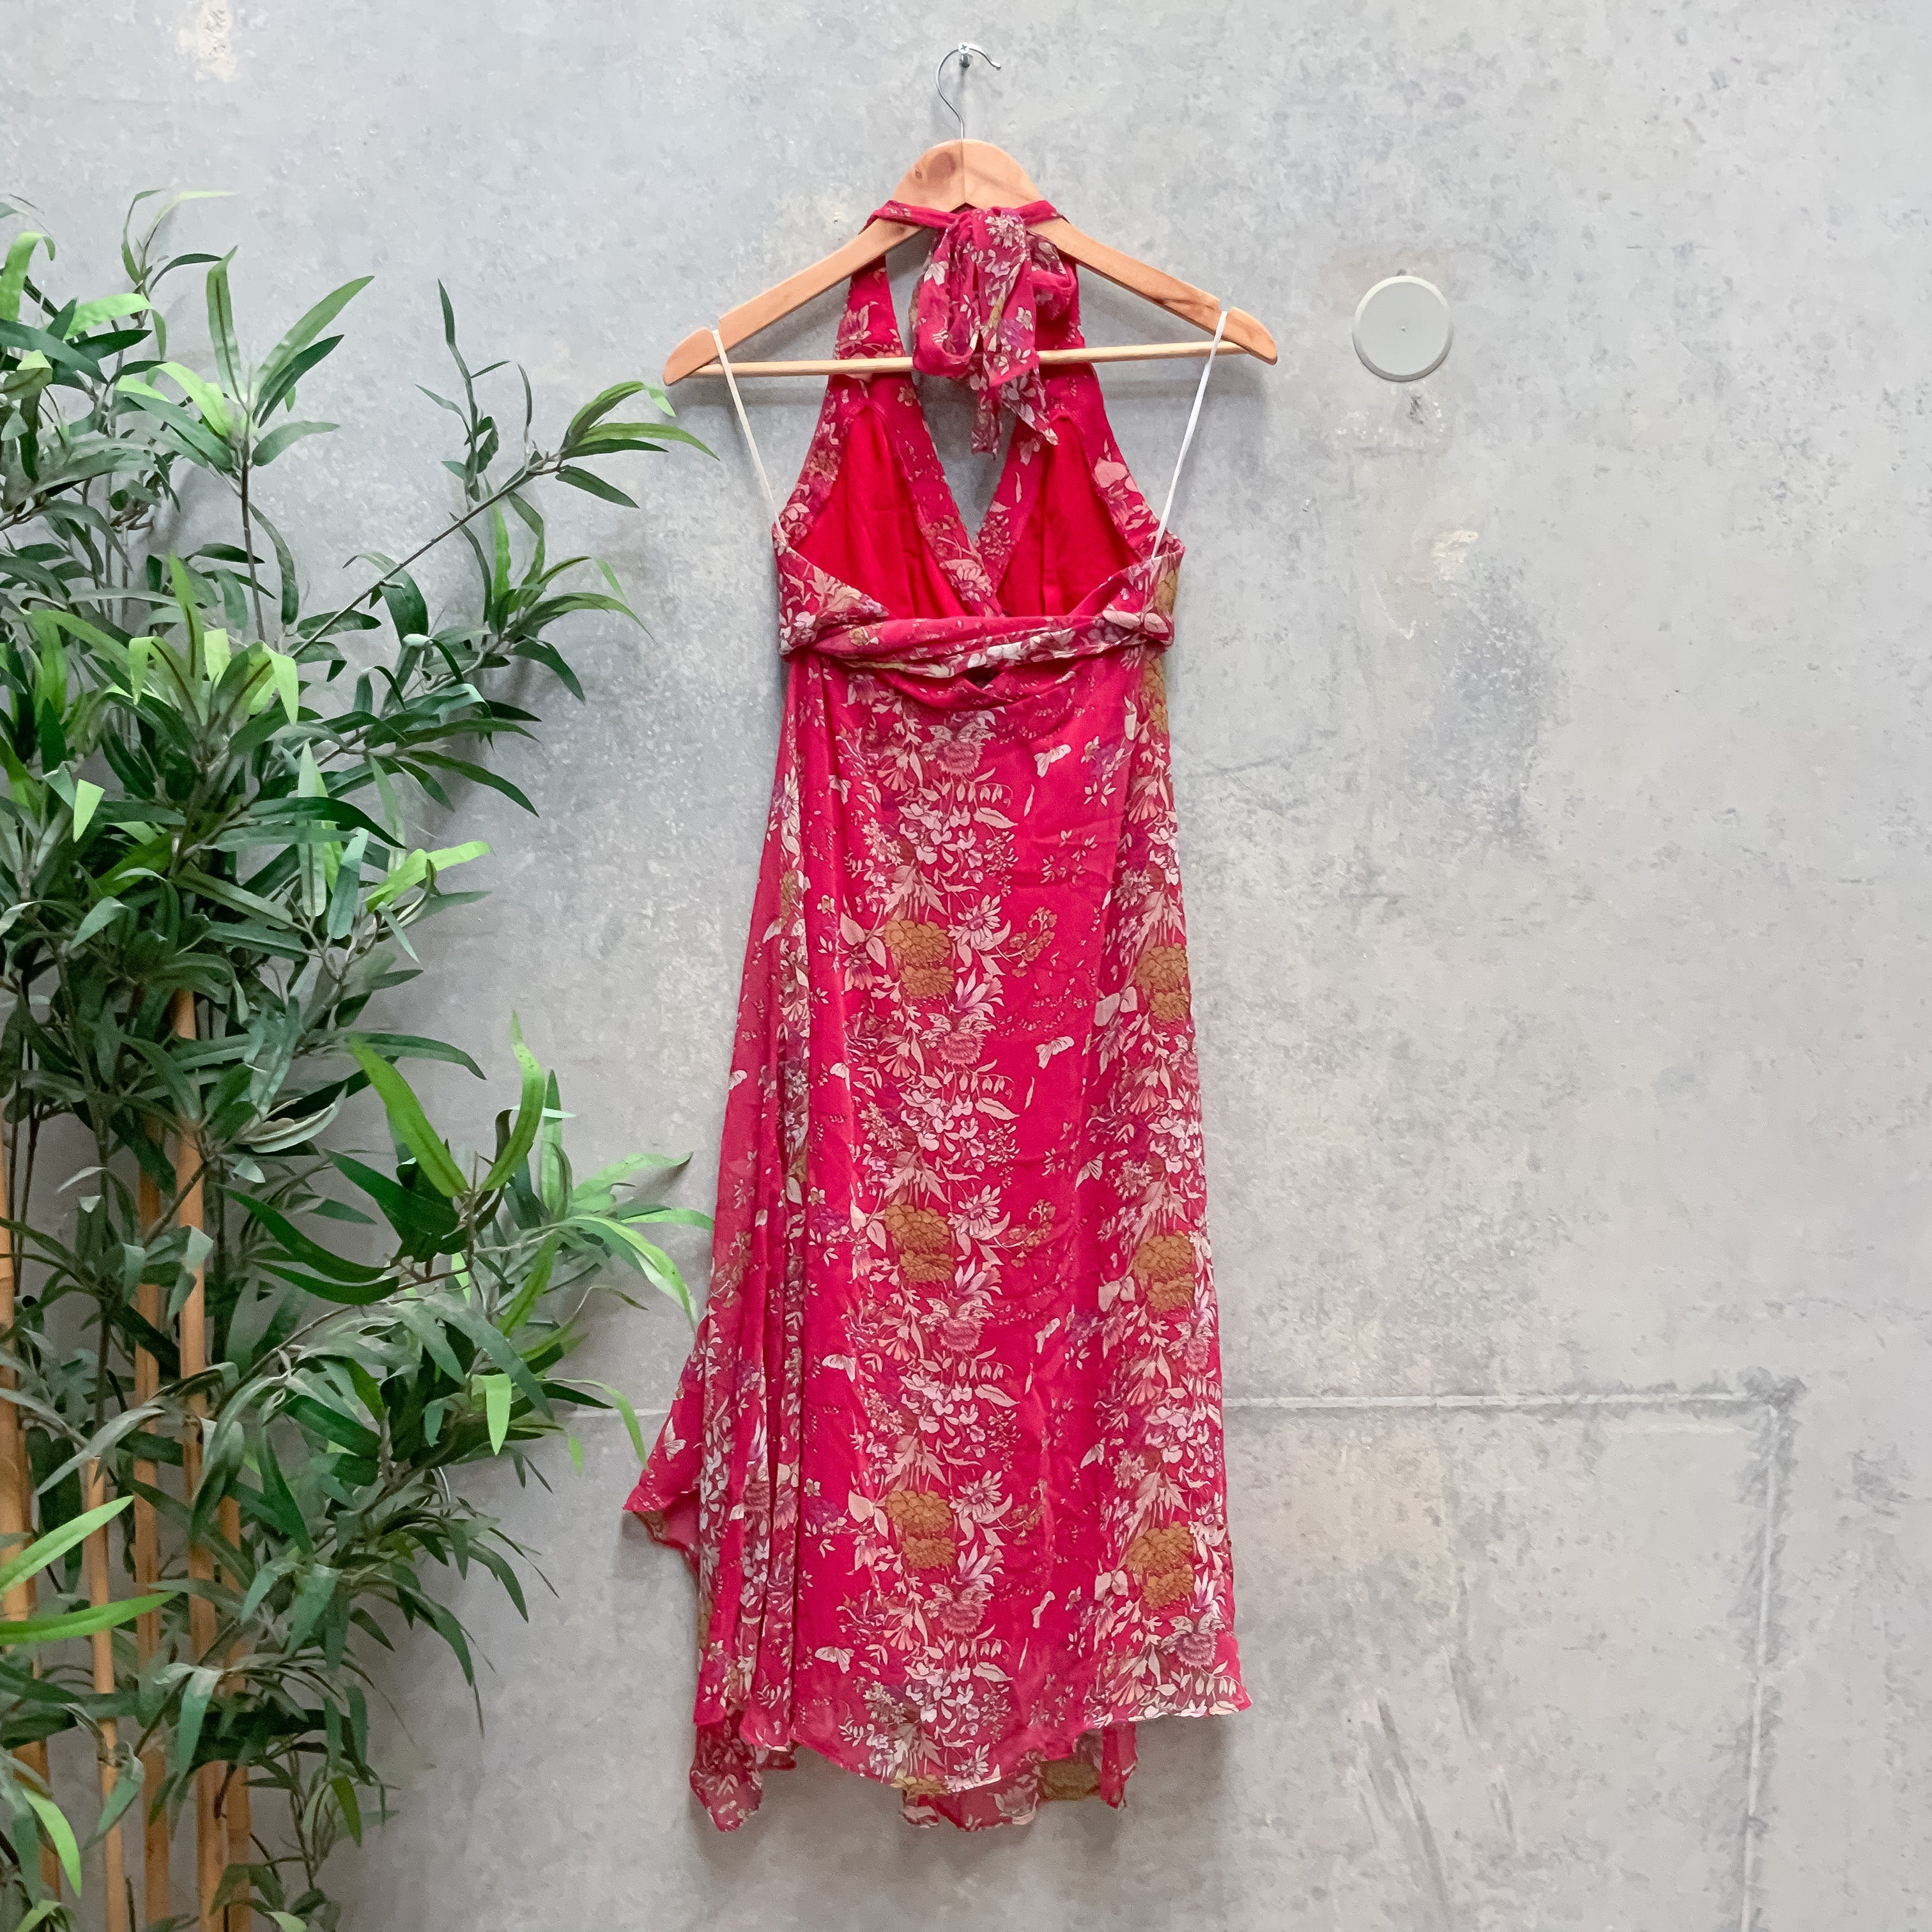 BNWT VOK Boho Pink Floral Print Halter Open Back Midi Dress - Size 8